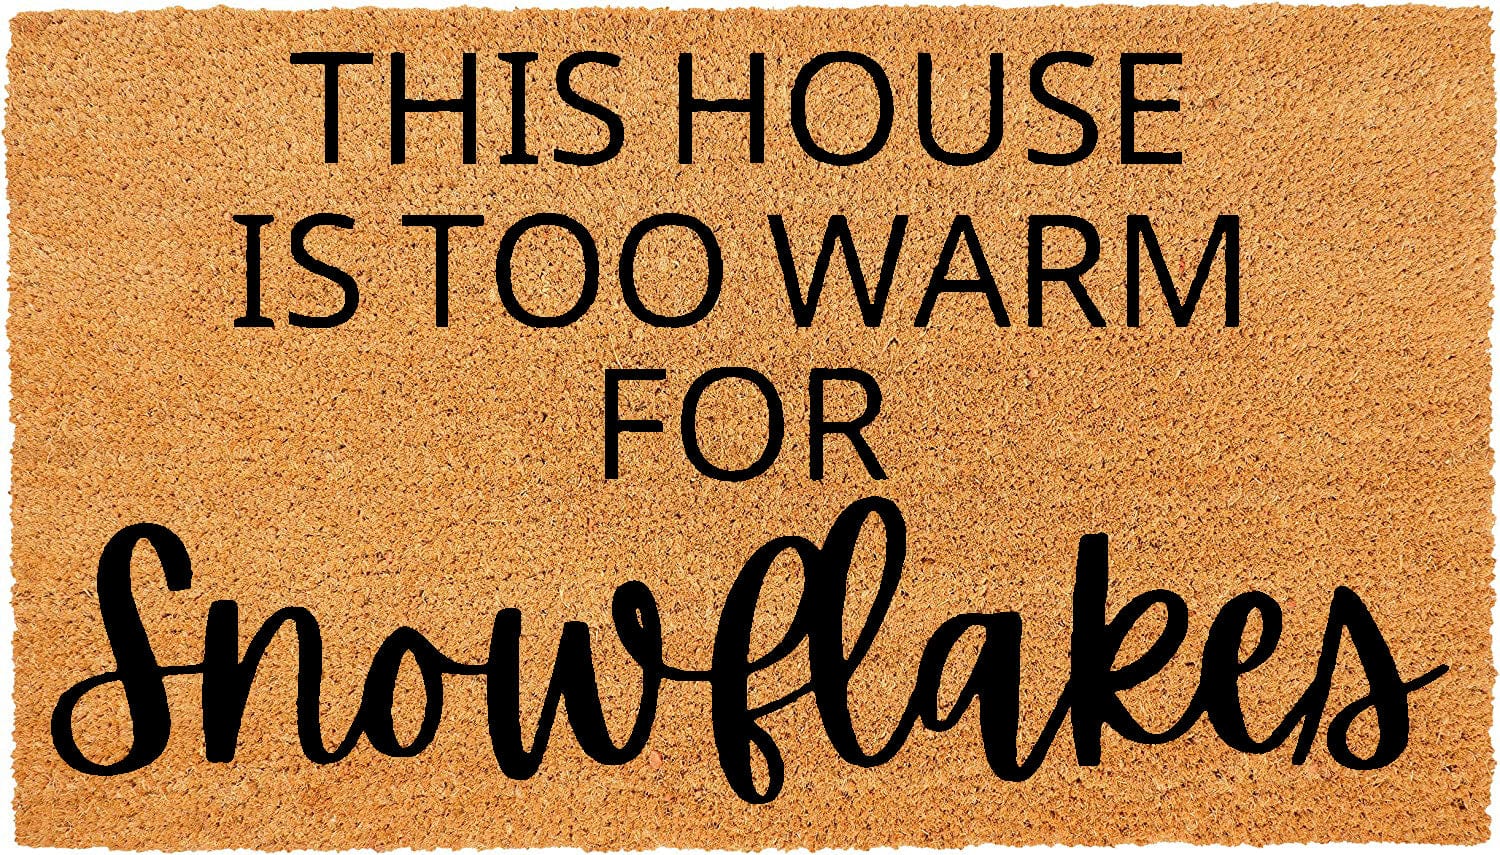 For Snowflakes Doormat